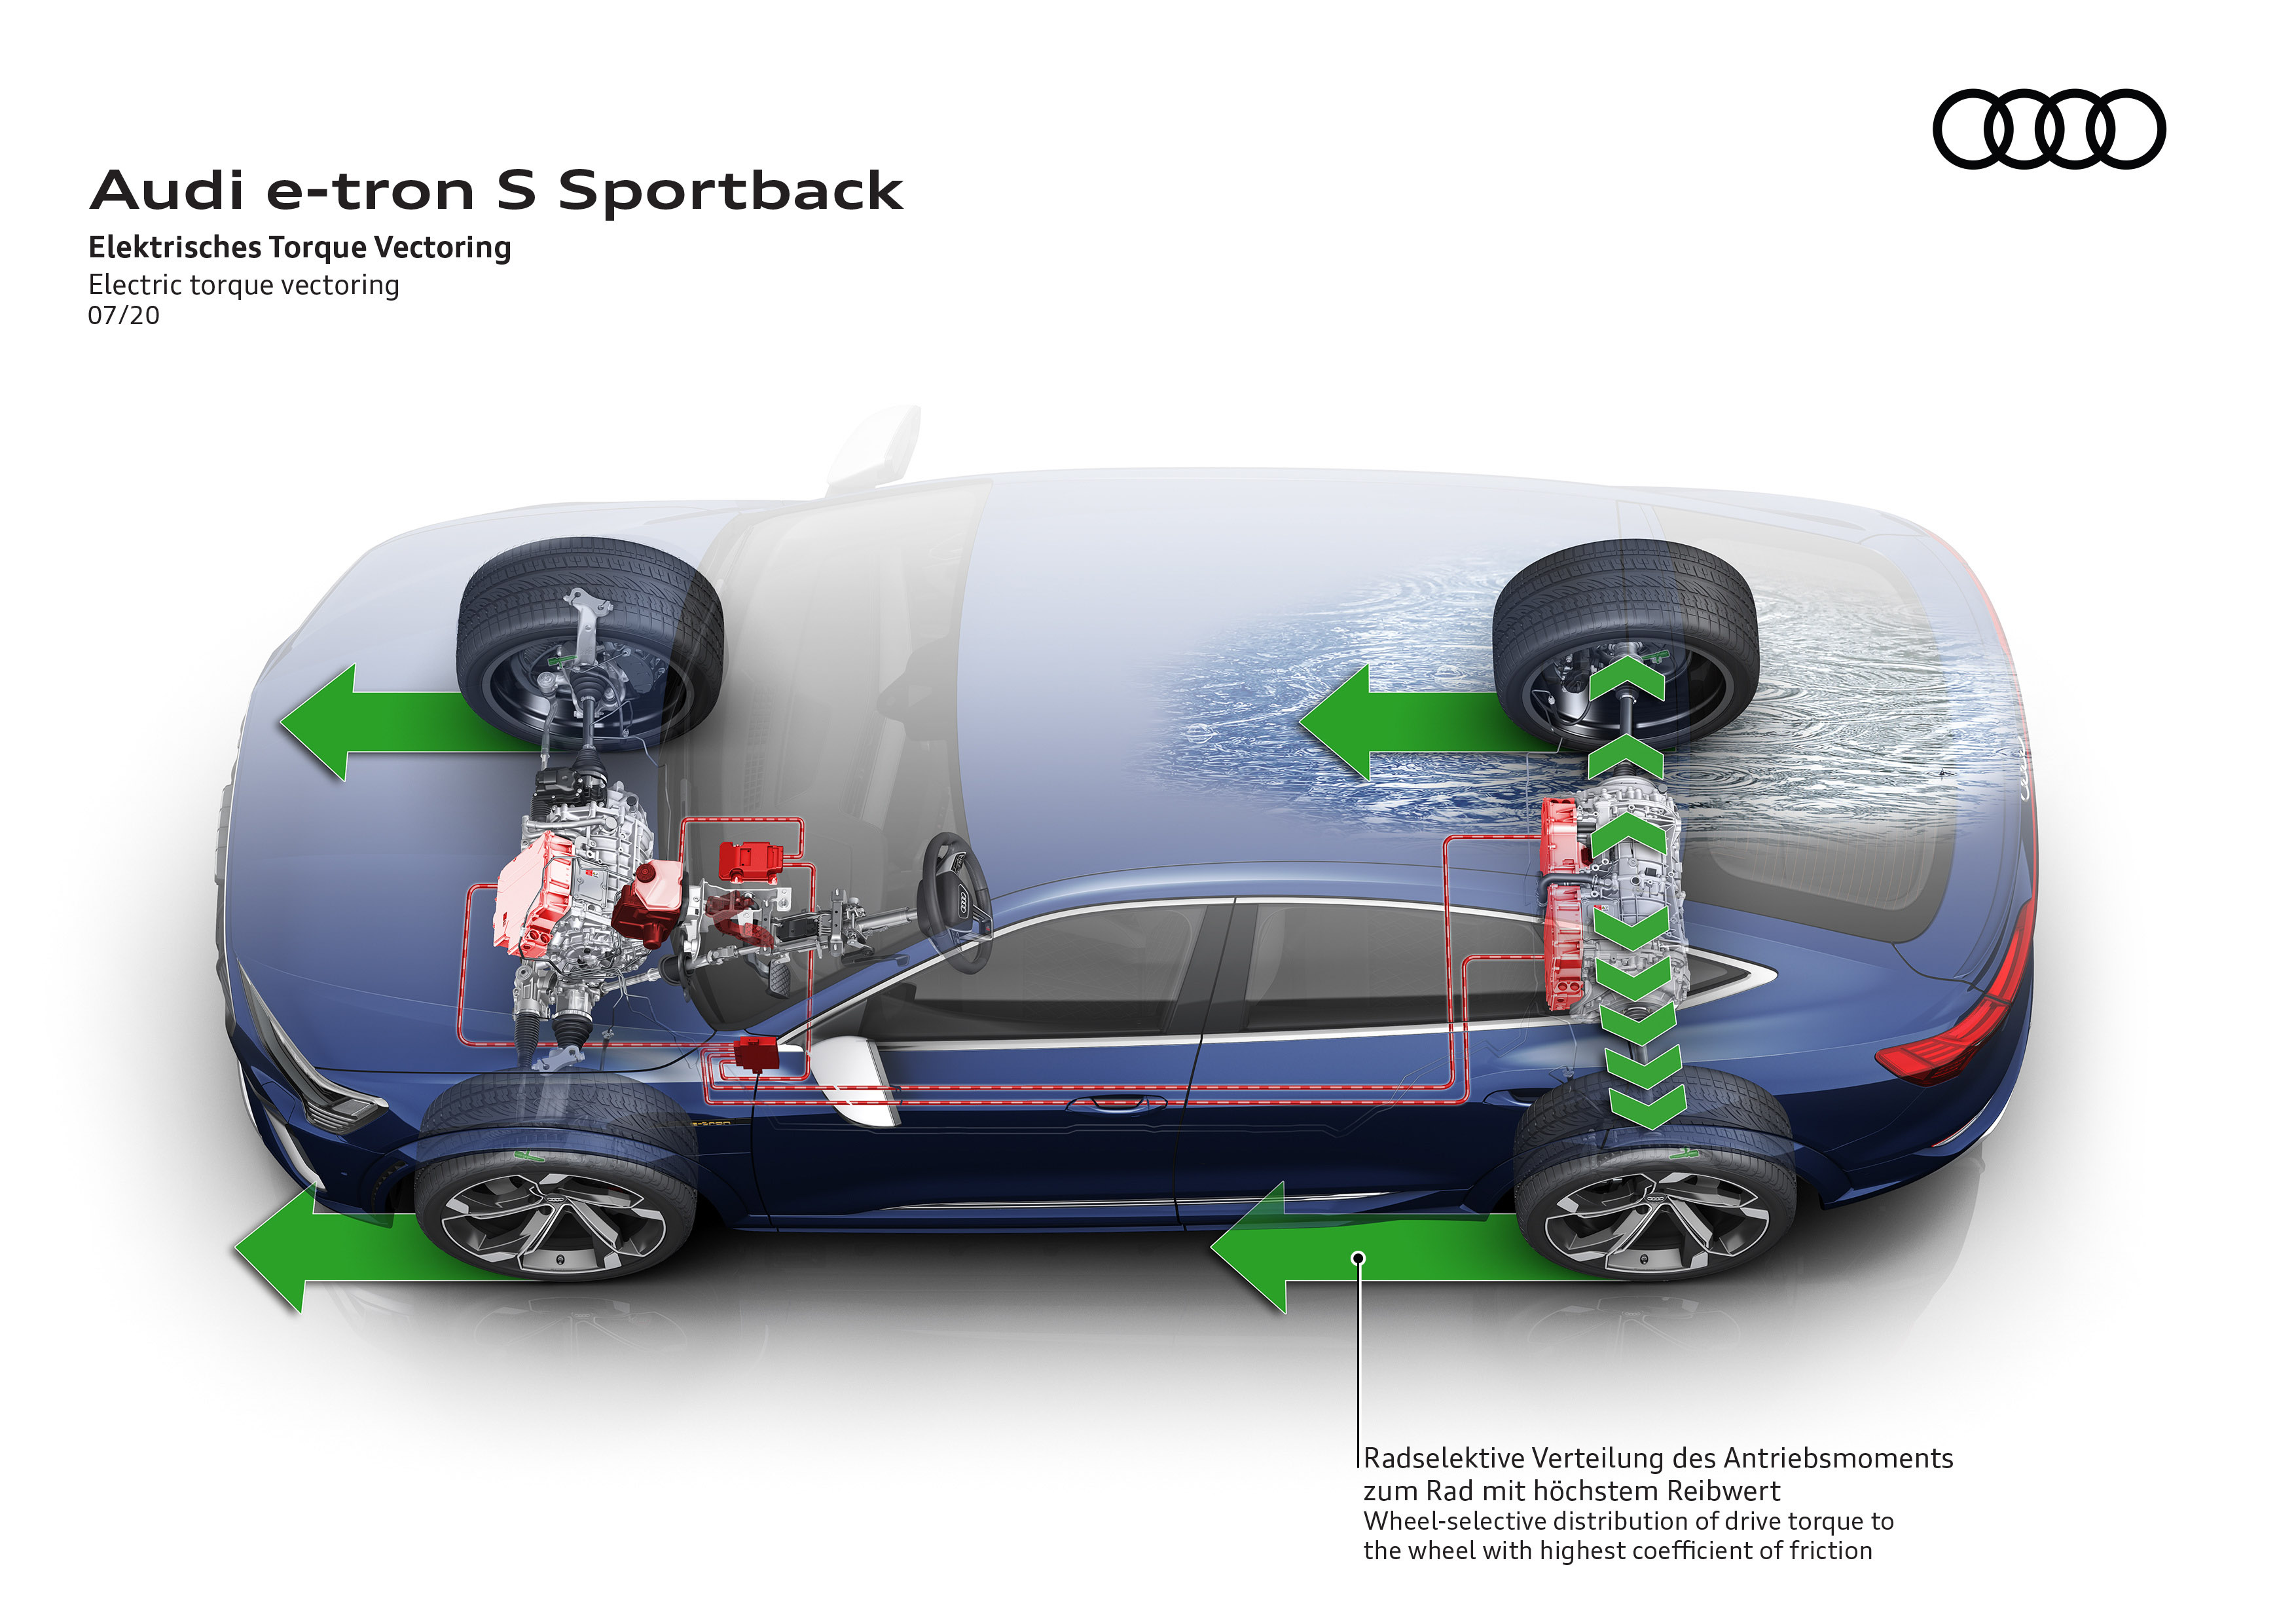 https://s3.paultan.org/image/2020/09/Audi-e-tron-S-Sportback-75.jpg